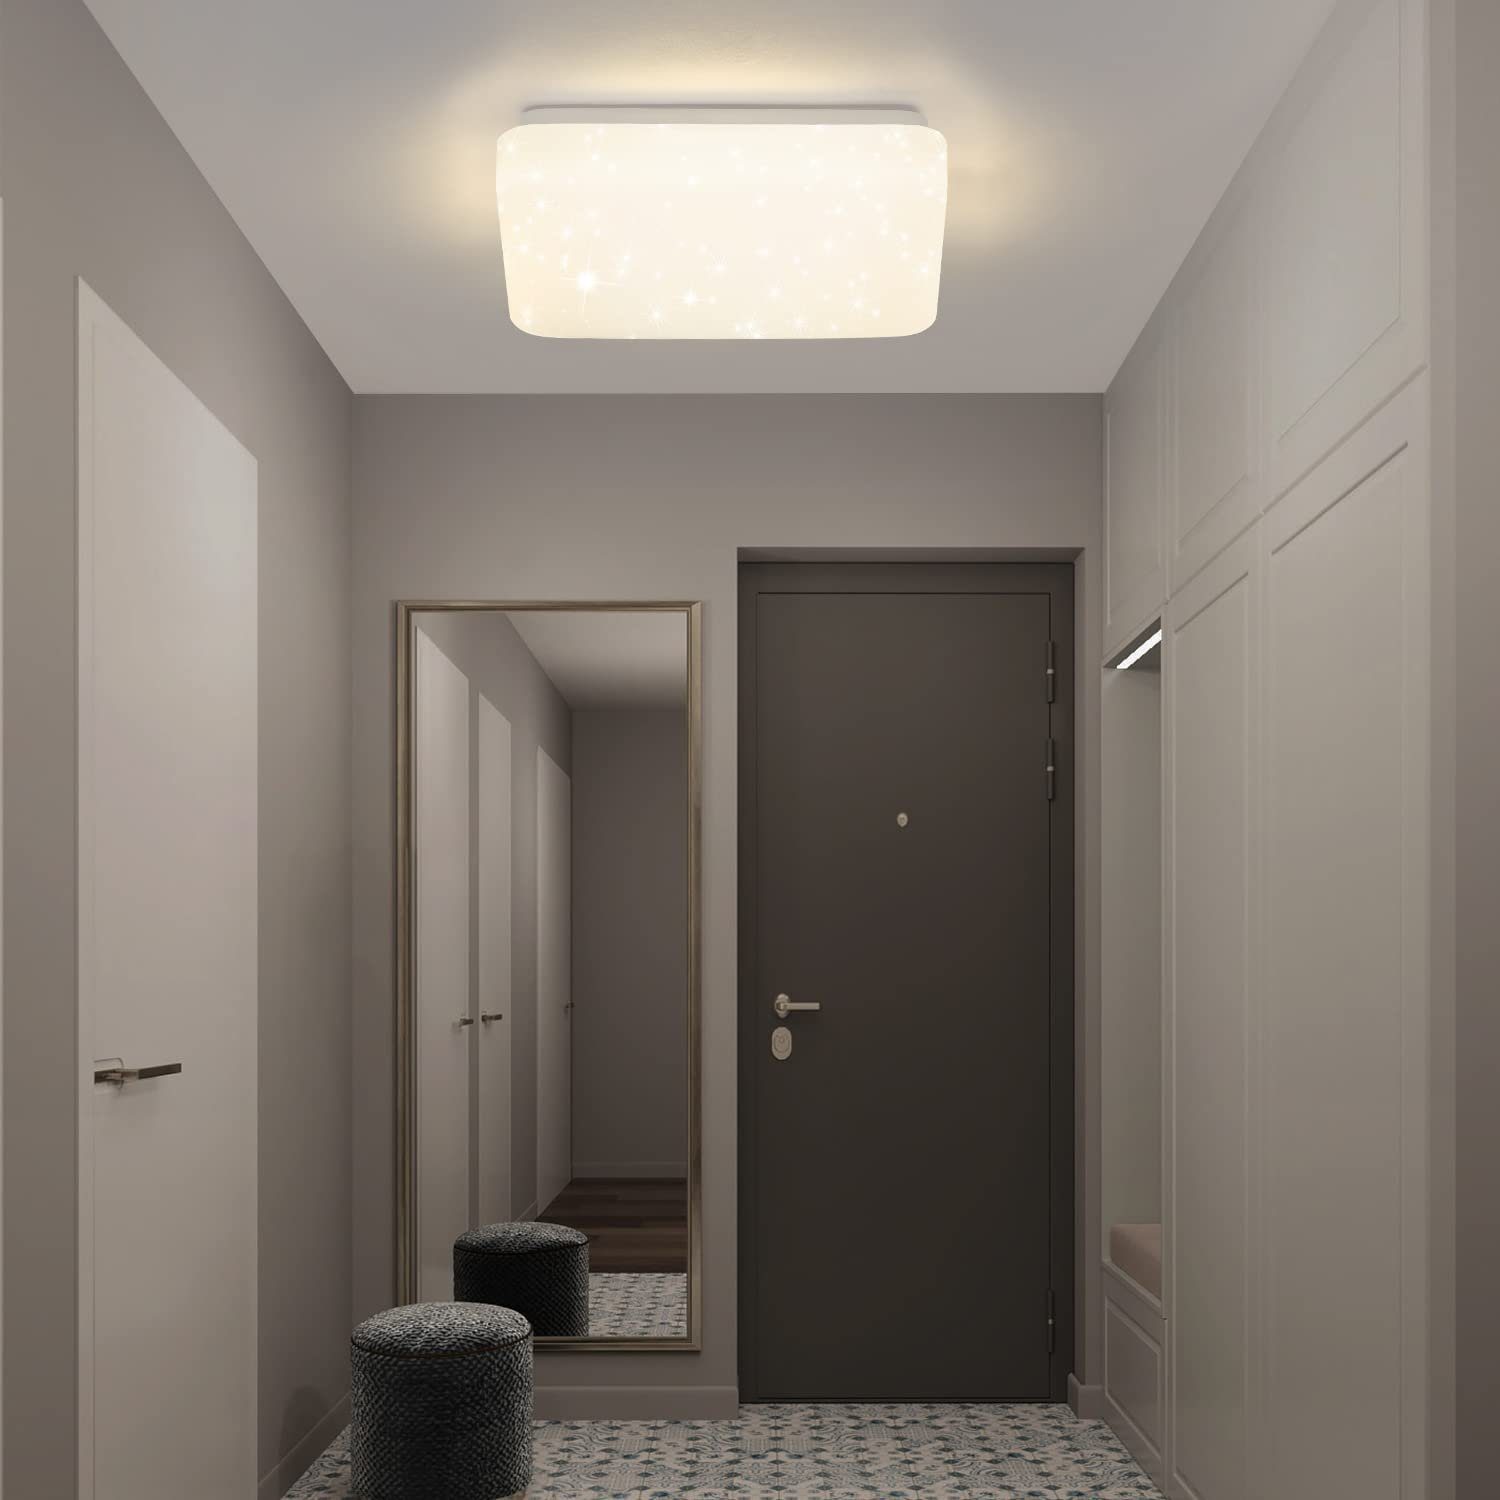 ZMH LED Deckenleuchte Sternenhimmel klein integriert, fest LED flach Schlafzimmerlampe 4000K Modern